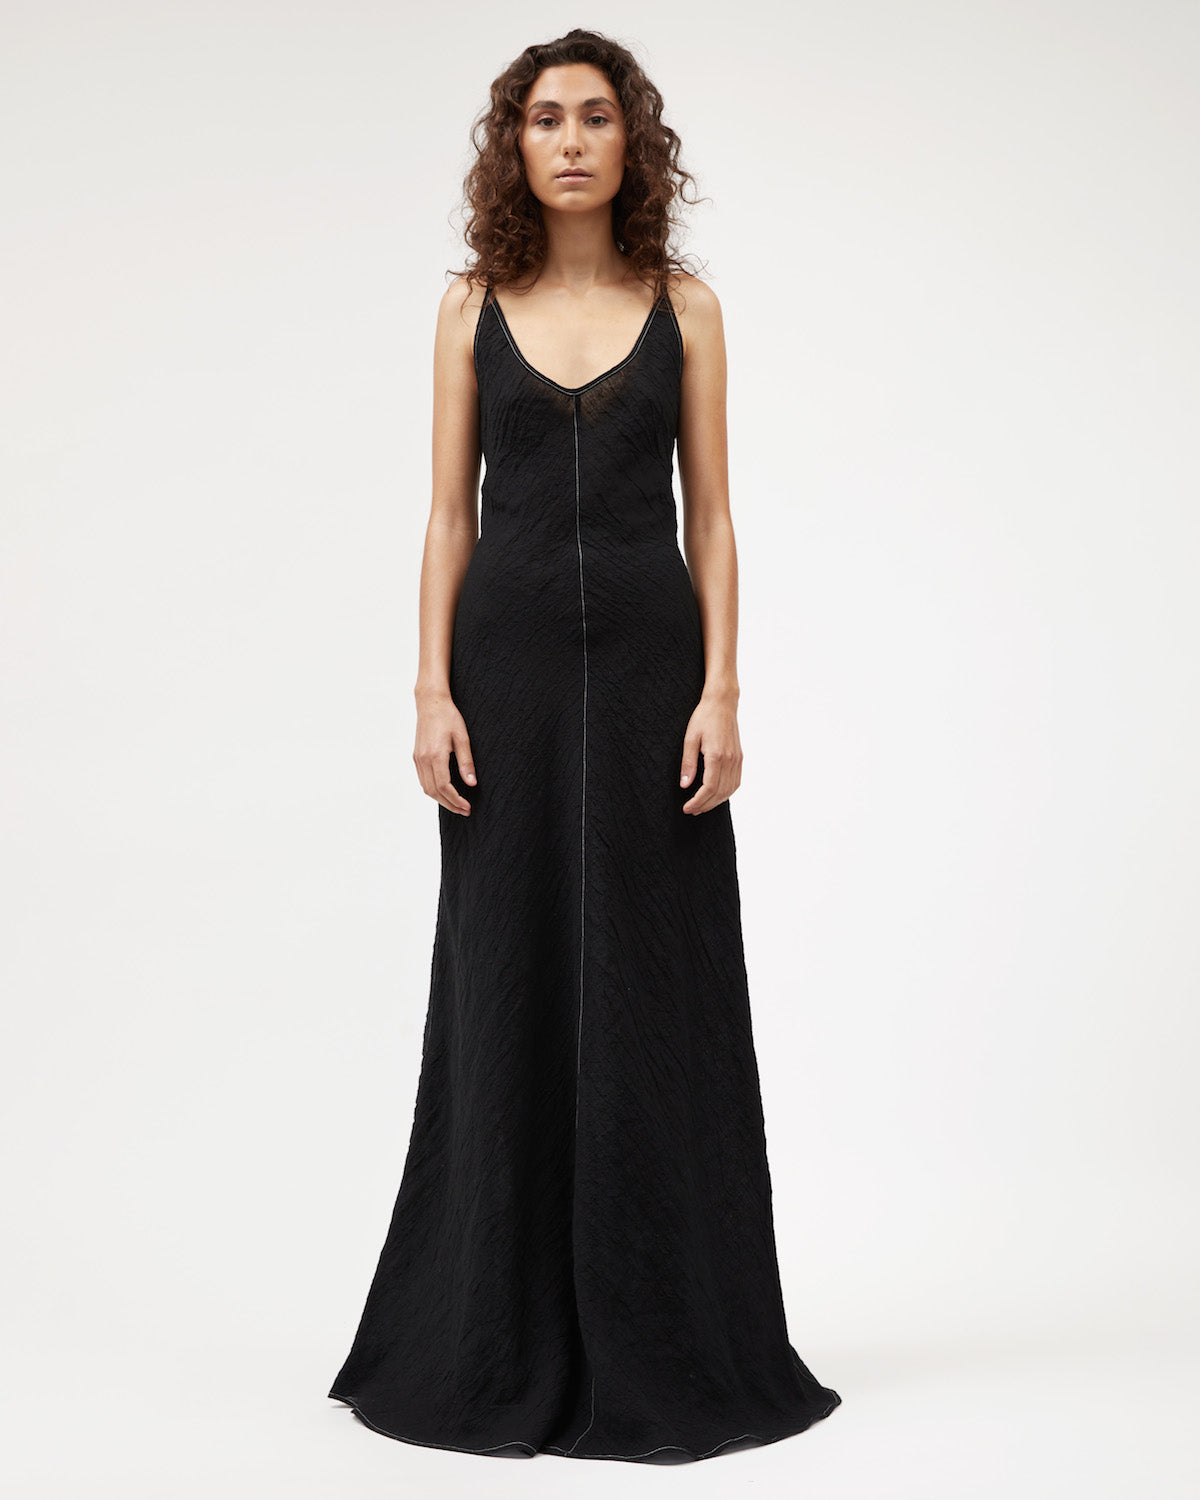 Sloane Dress | Black Contrast Stitch Linen $335